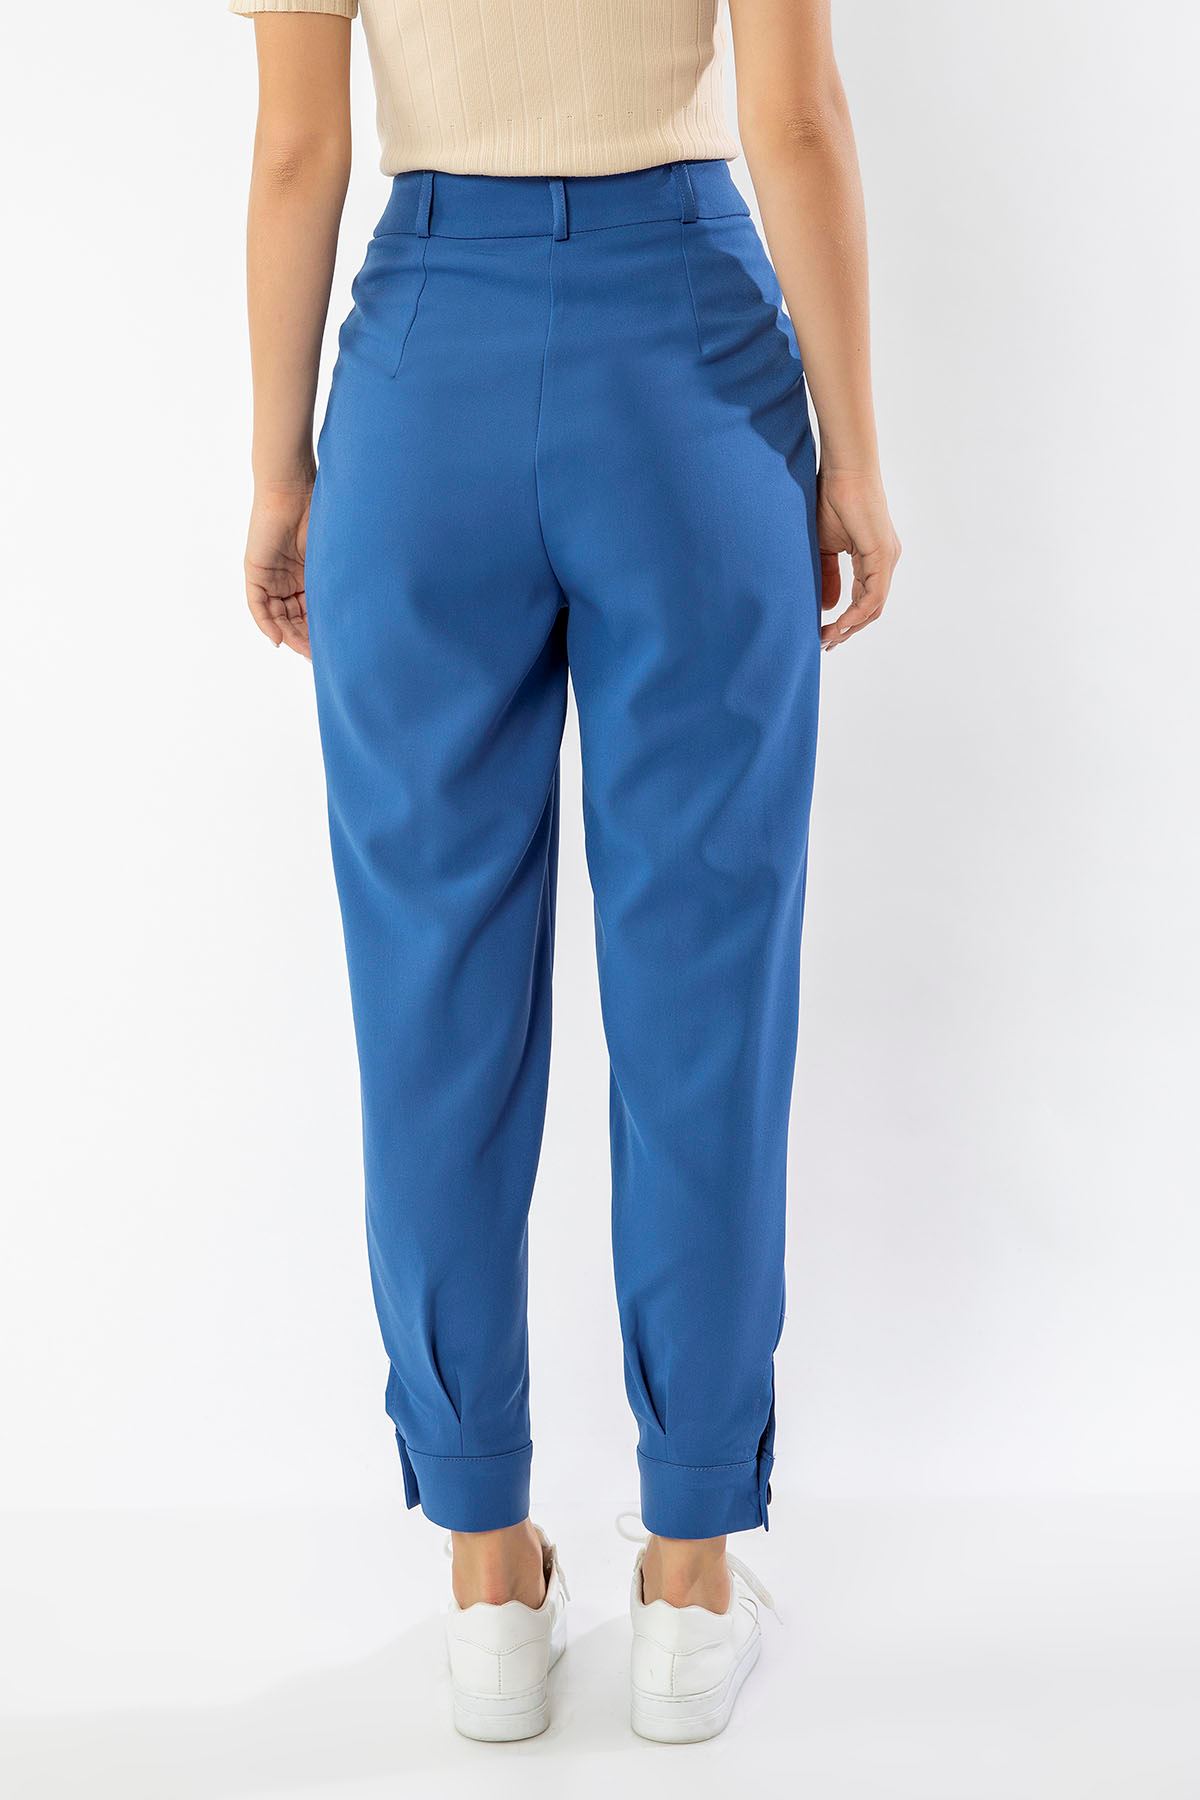 Atlas Fabric Carrot Style Button Women'S Trouser - Navy Blue 